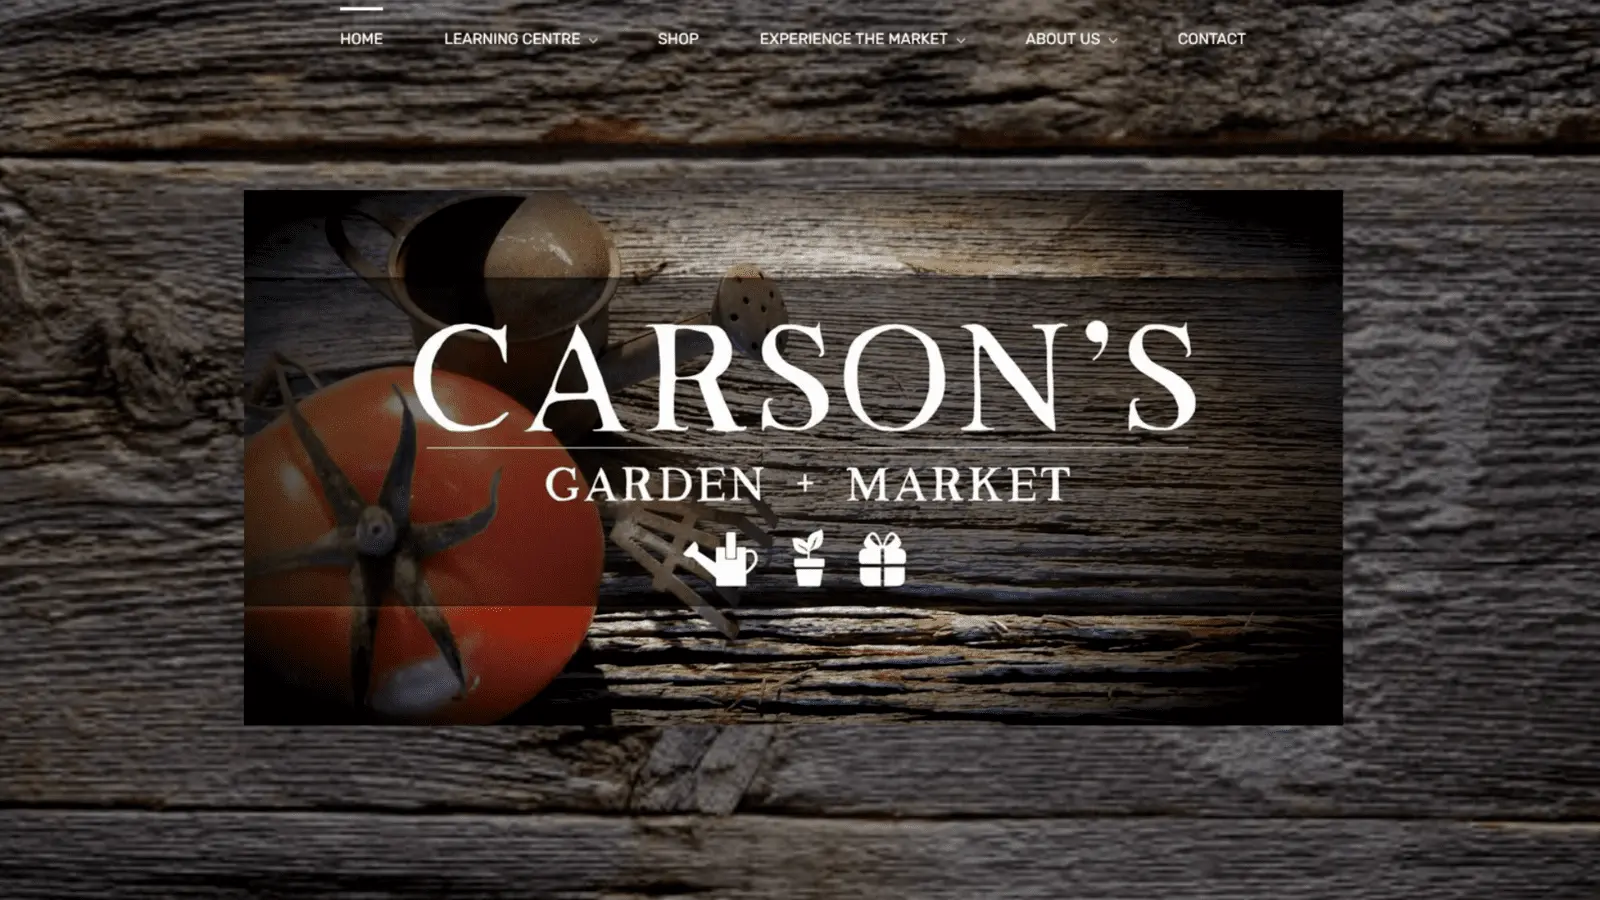 carsons garden market website